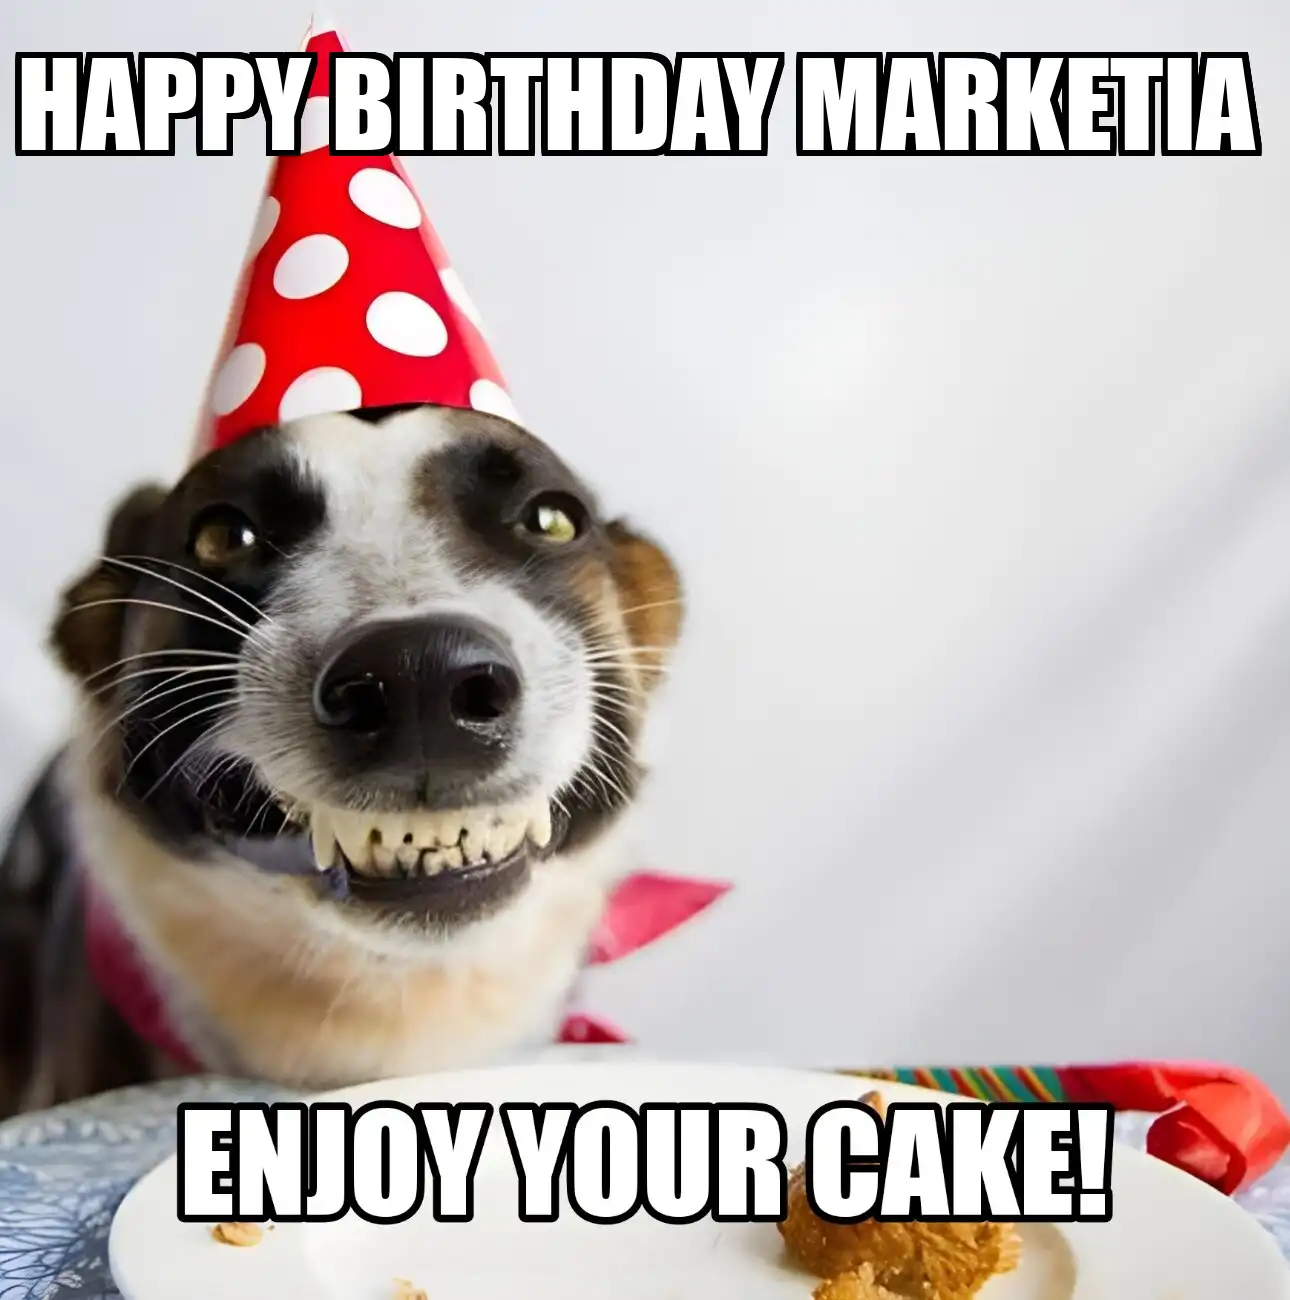 Happy Birthday Marketia Enjoy Your Cake Dog Meme